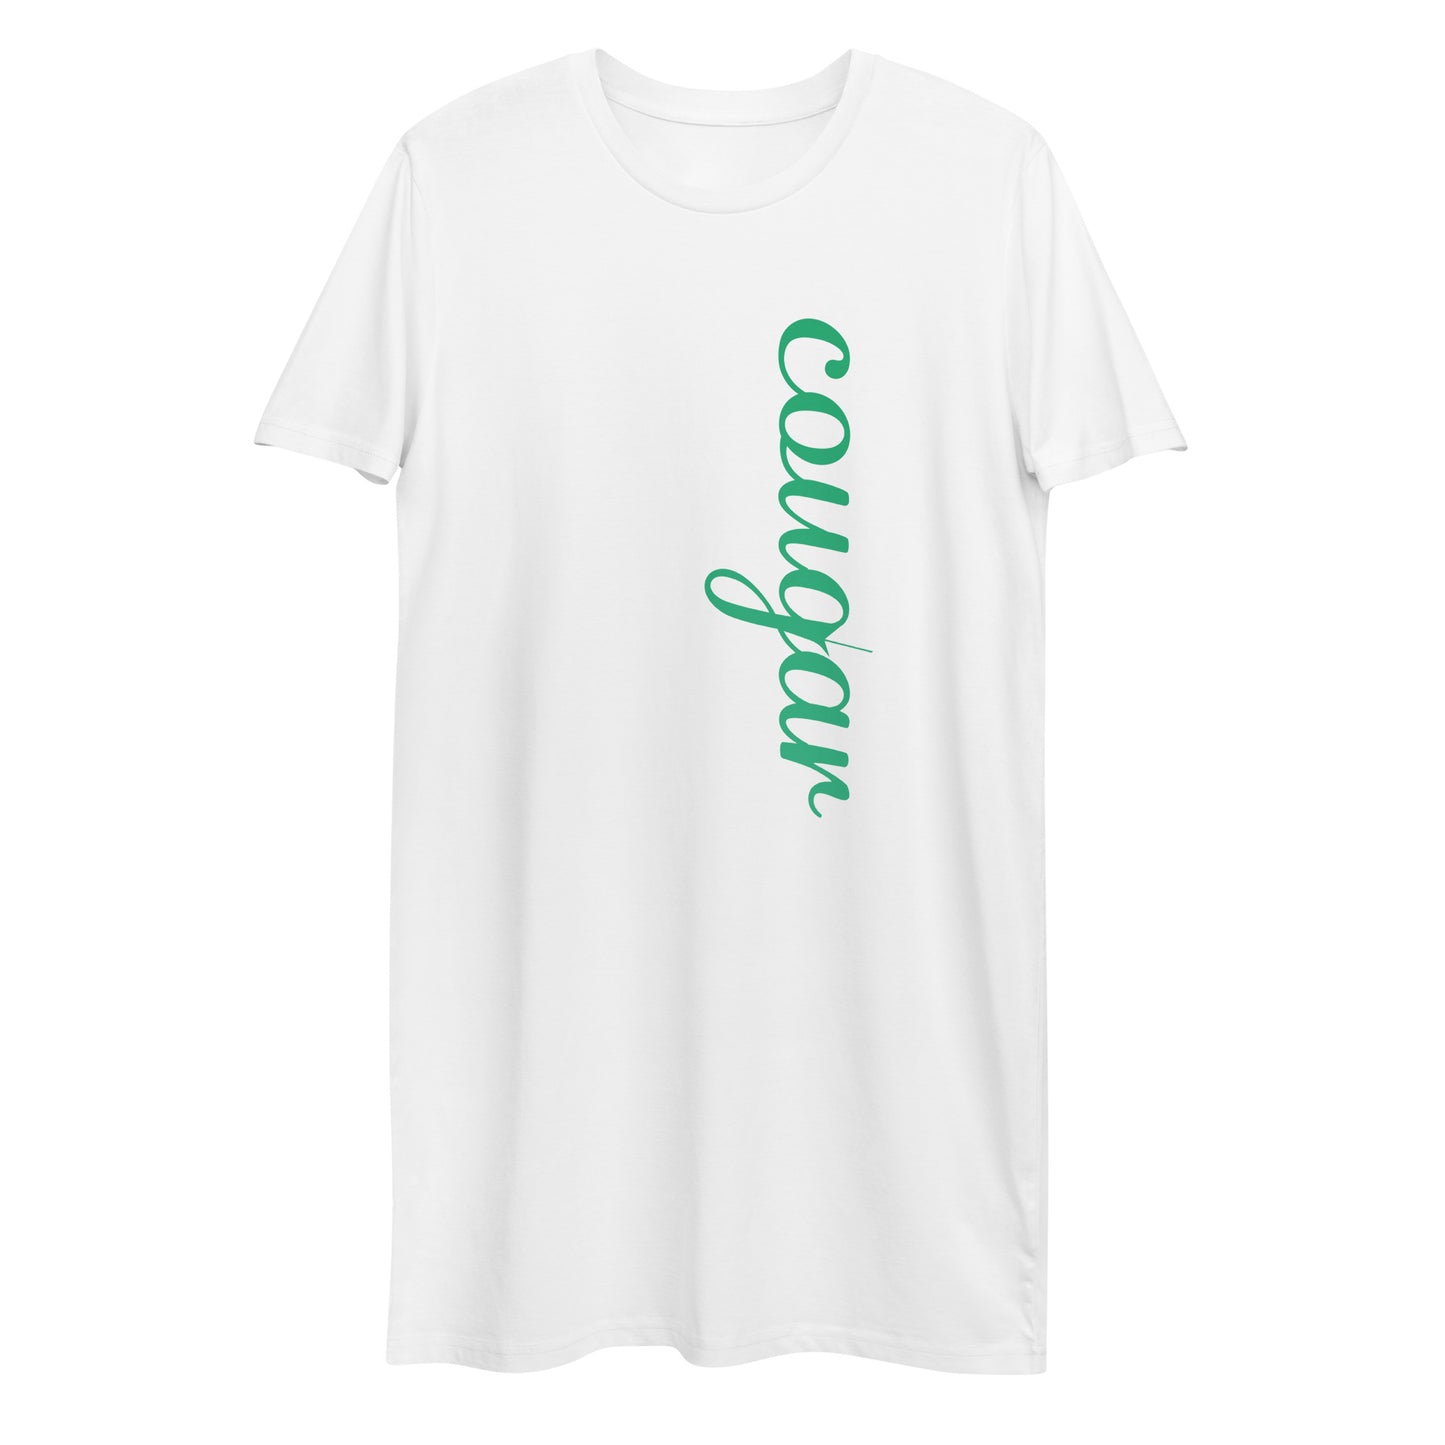 Cougar Organic cotton t-shirt dress